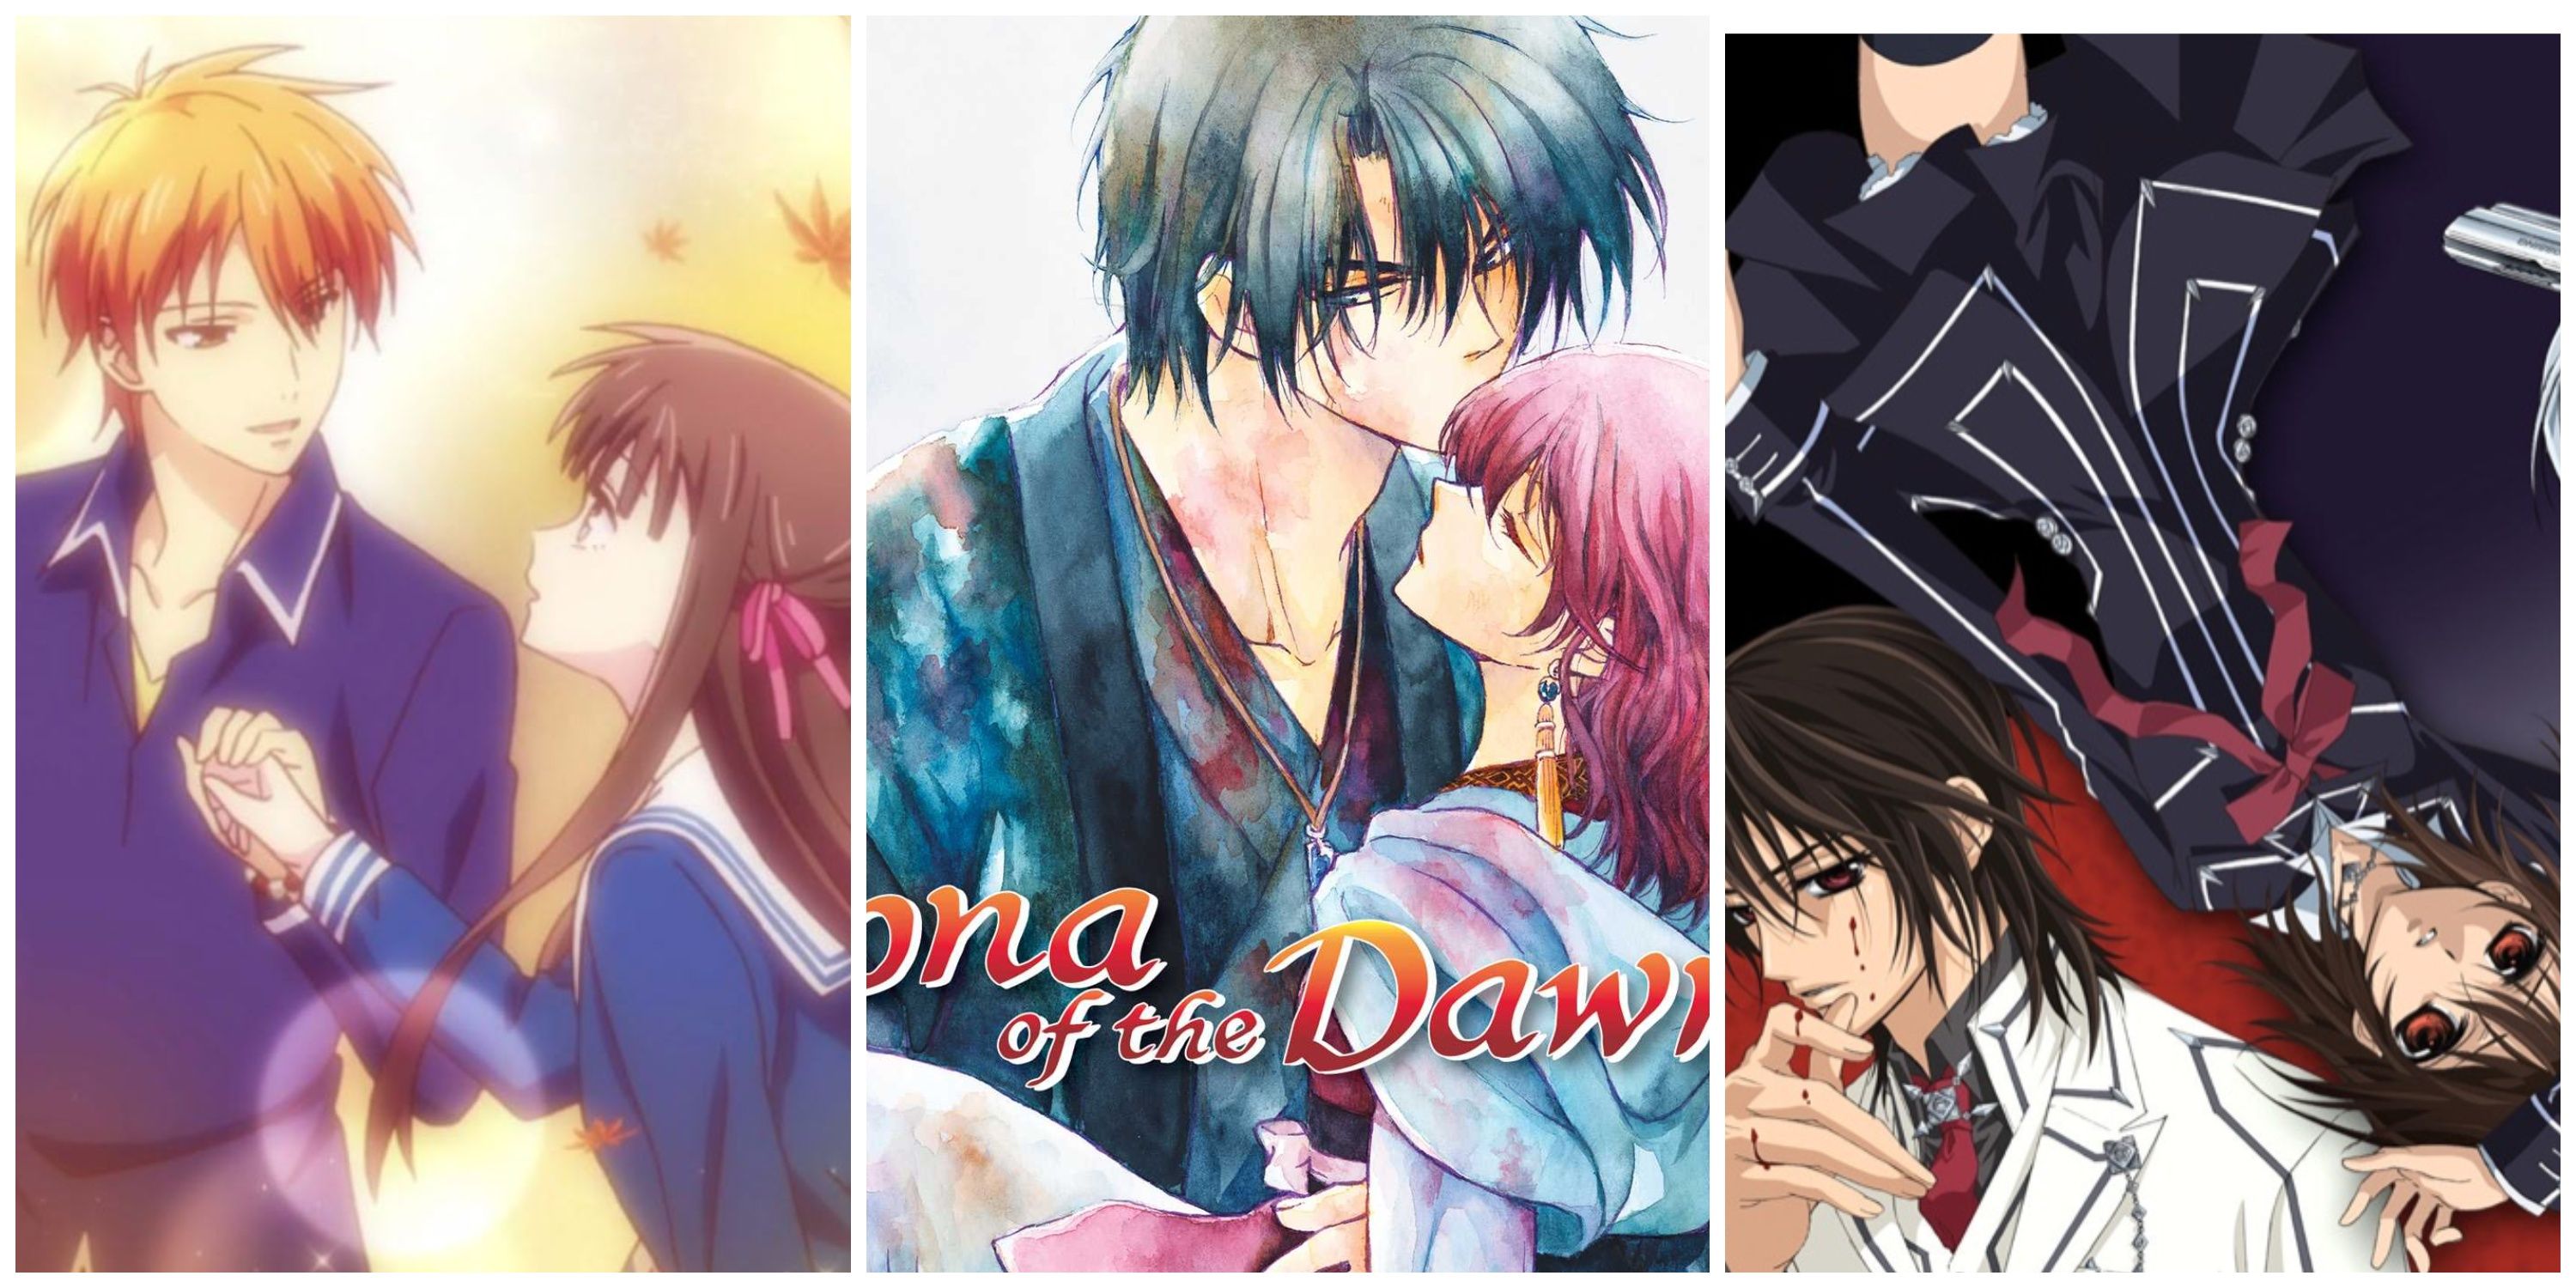 Best Demon/Angel Romance Anime - by GabriellaGaggiano | Anime-Planet